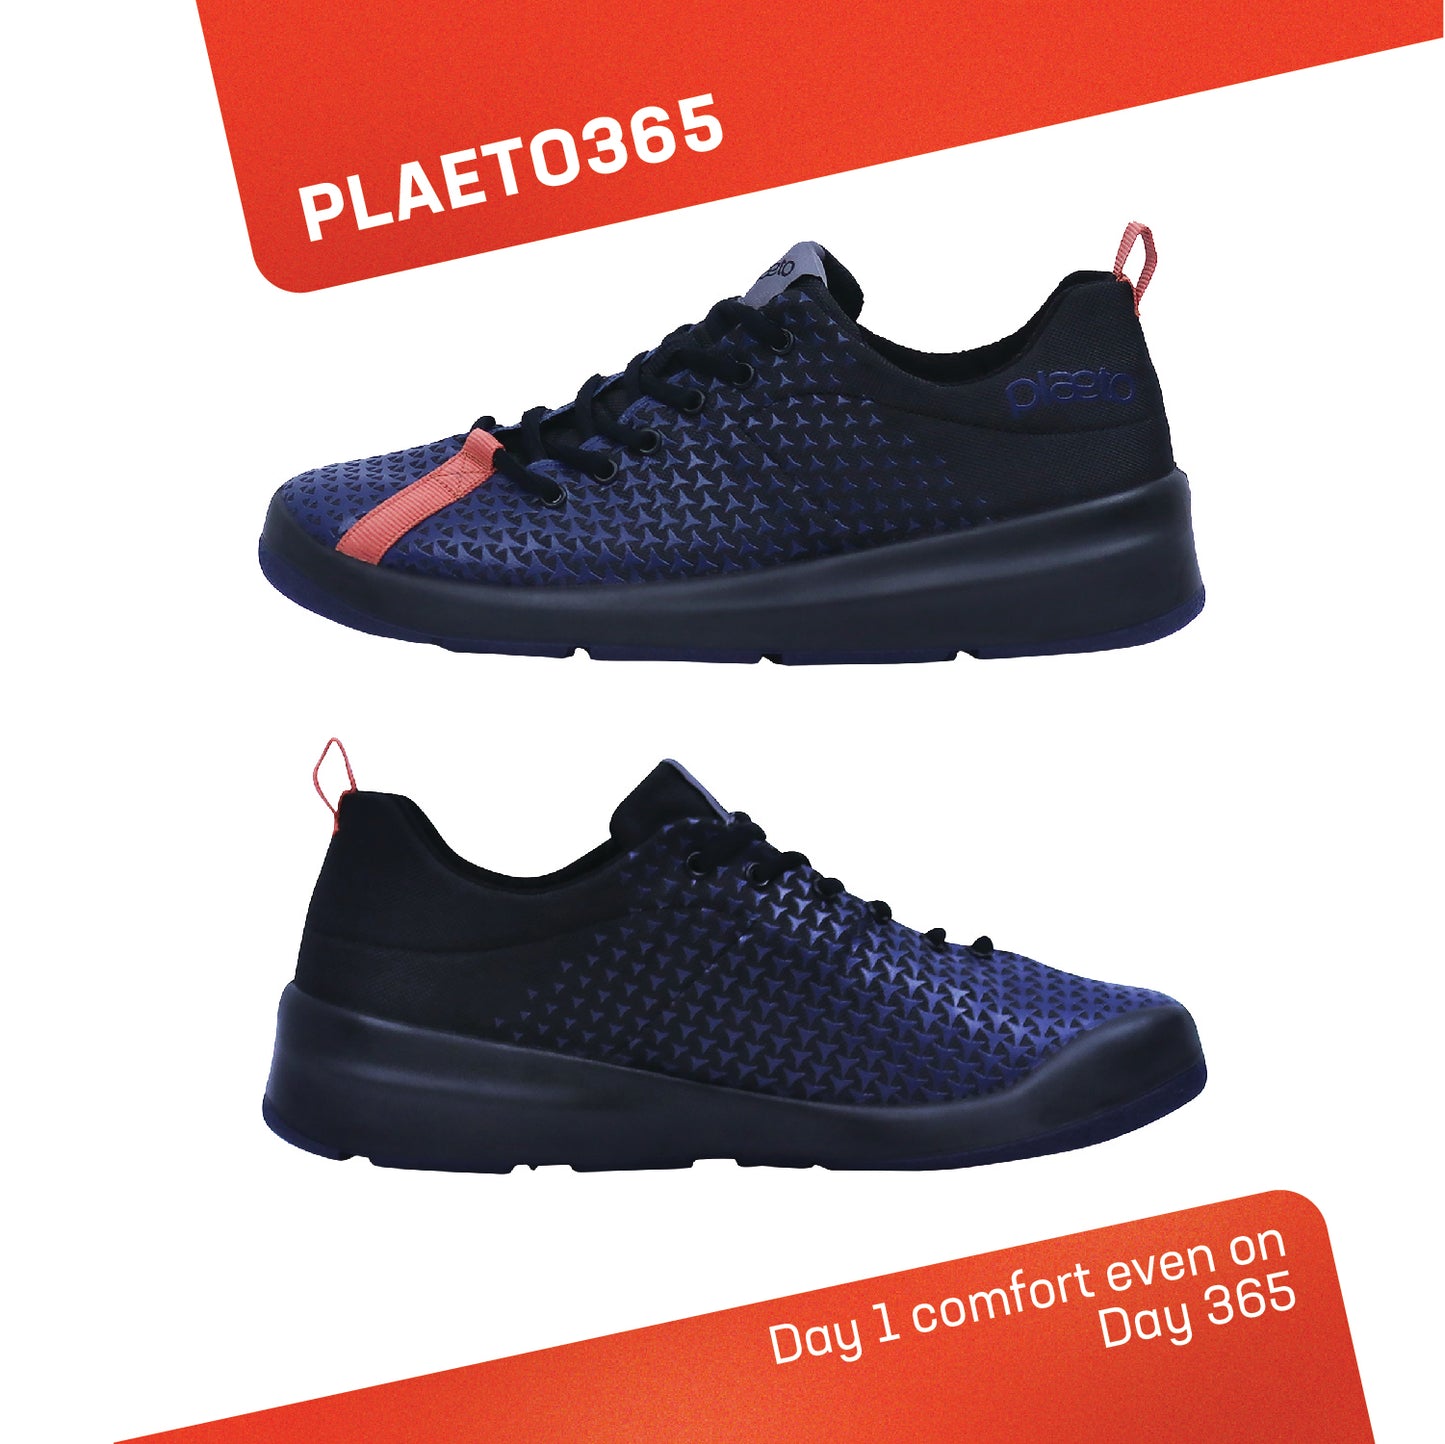 Starblast Men's Sports Shoes - Black / Navy Blue